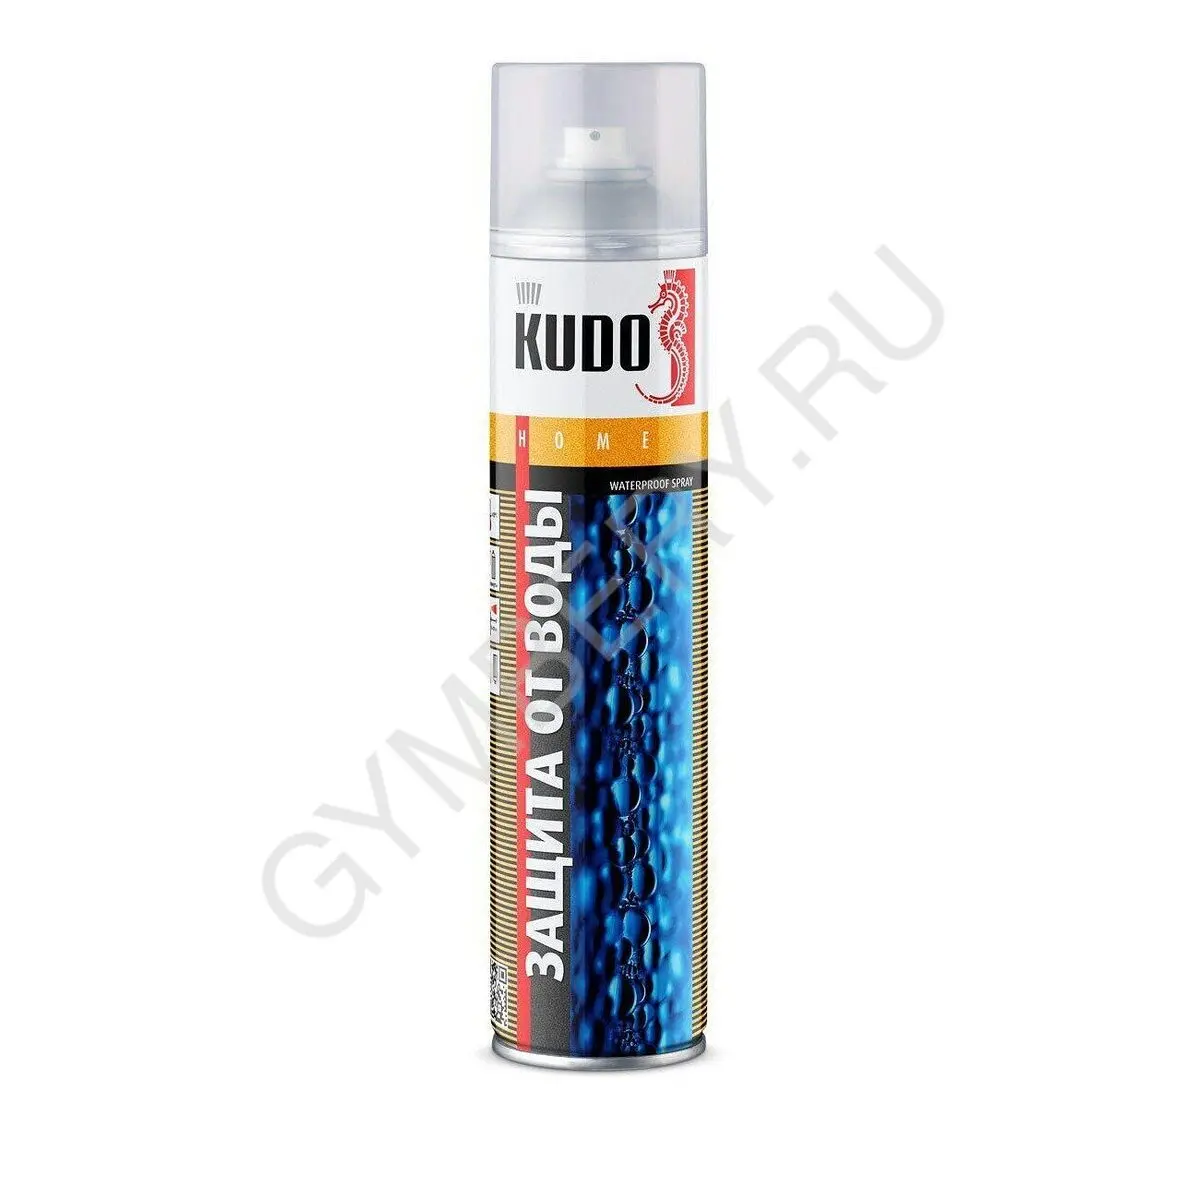 KUDO Защита от воды. Водоотталкивающая пропитка для кожи и текстиля 0,4л, (уп/12шт), арт. KU-H430